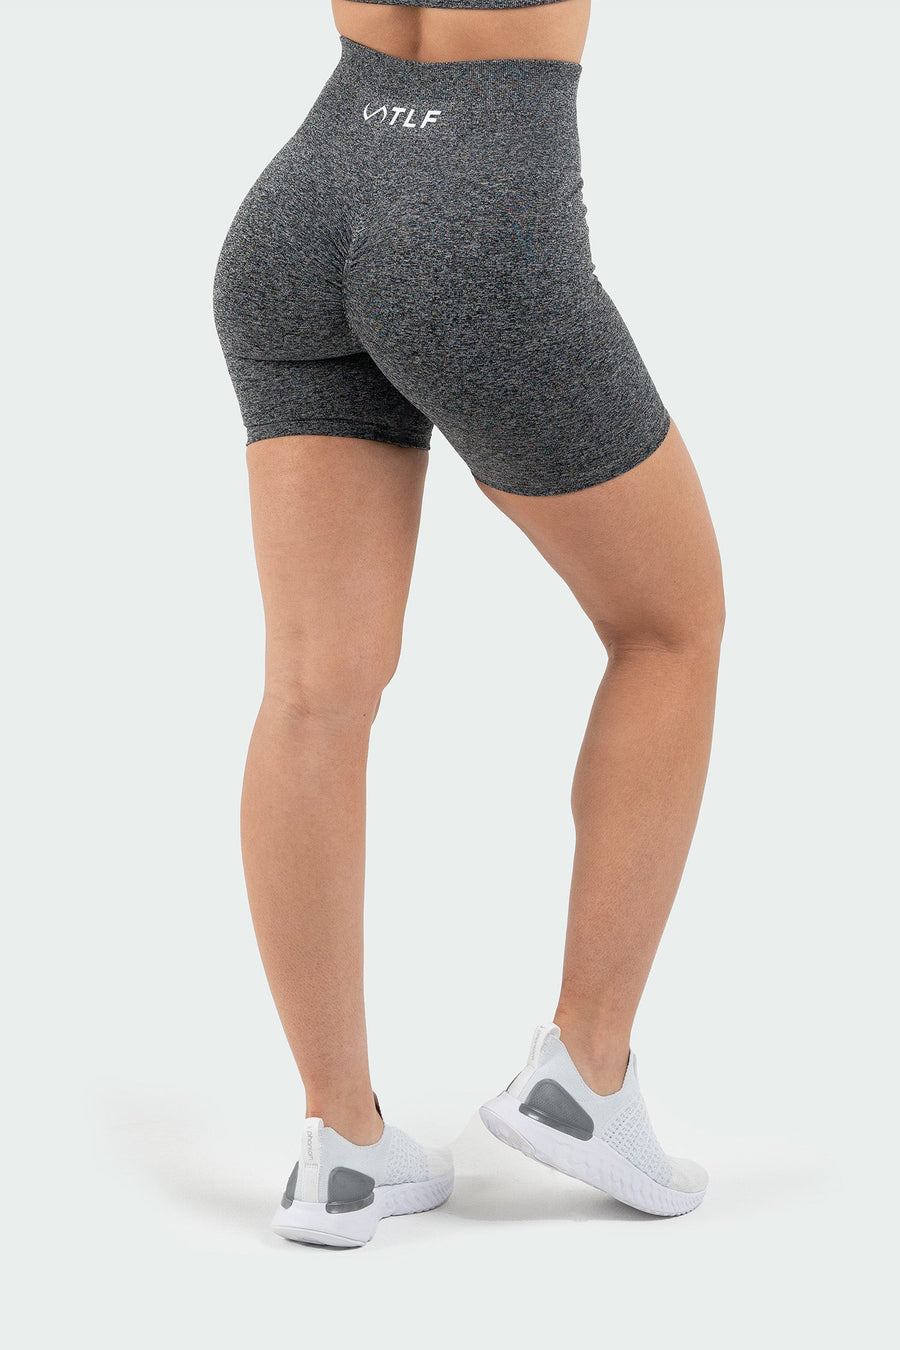 TLF Boost Seamless Scrunch Shorts - 5 Inch Inseam Shorts Women - Black - 3